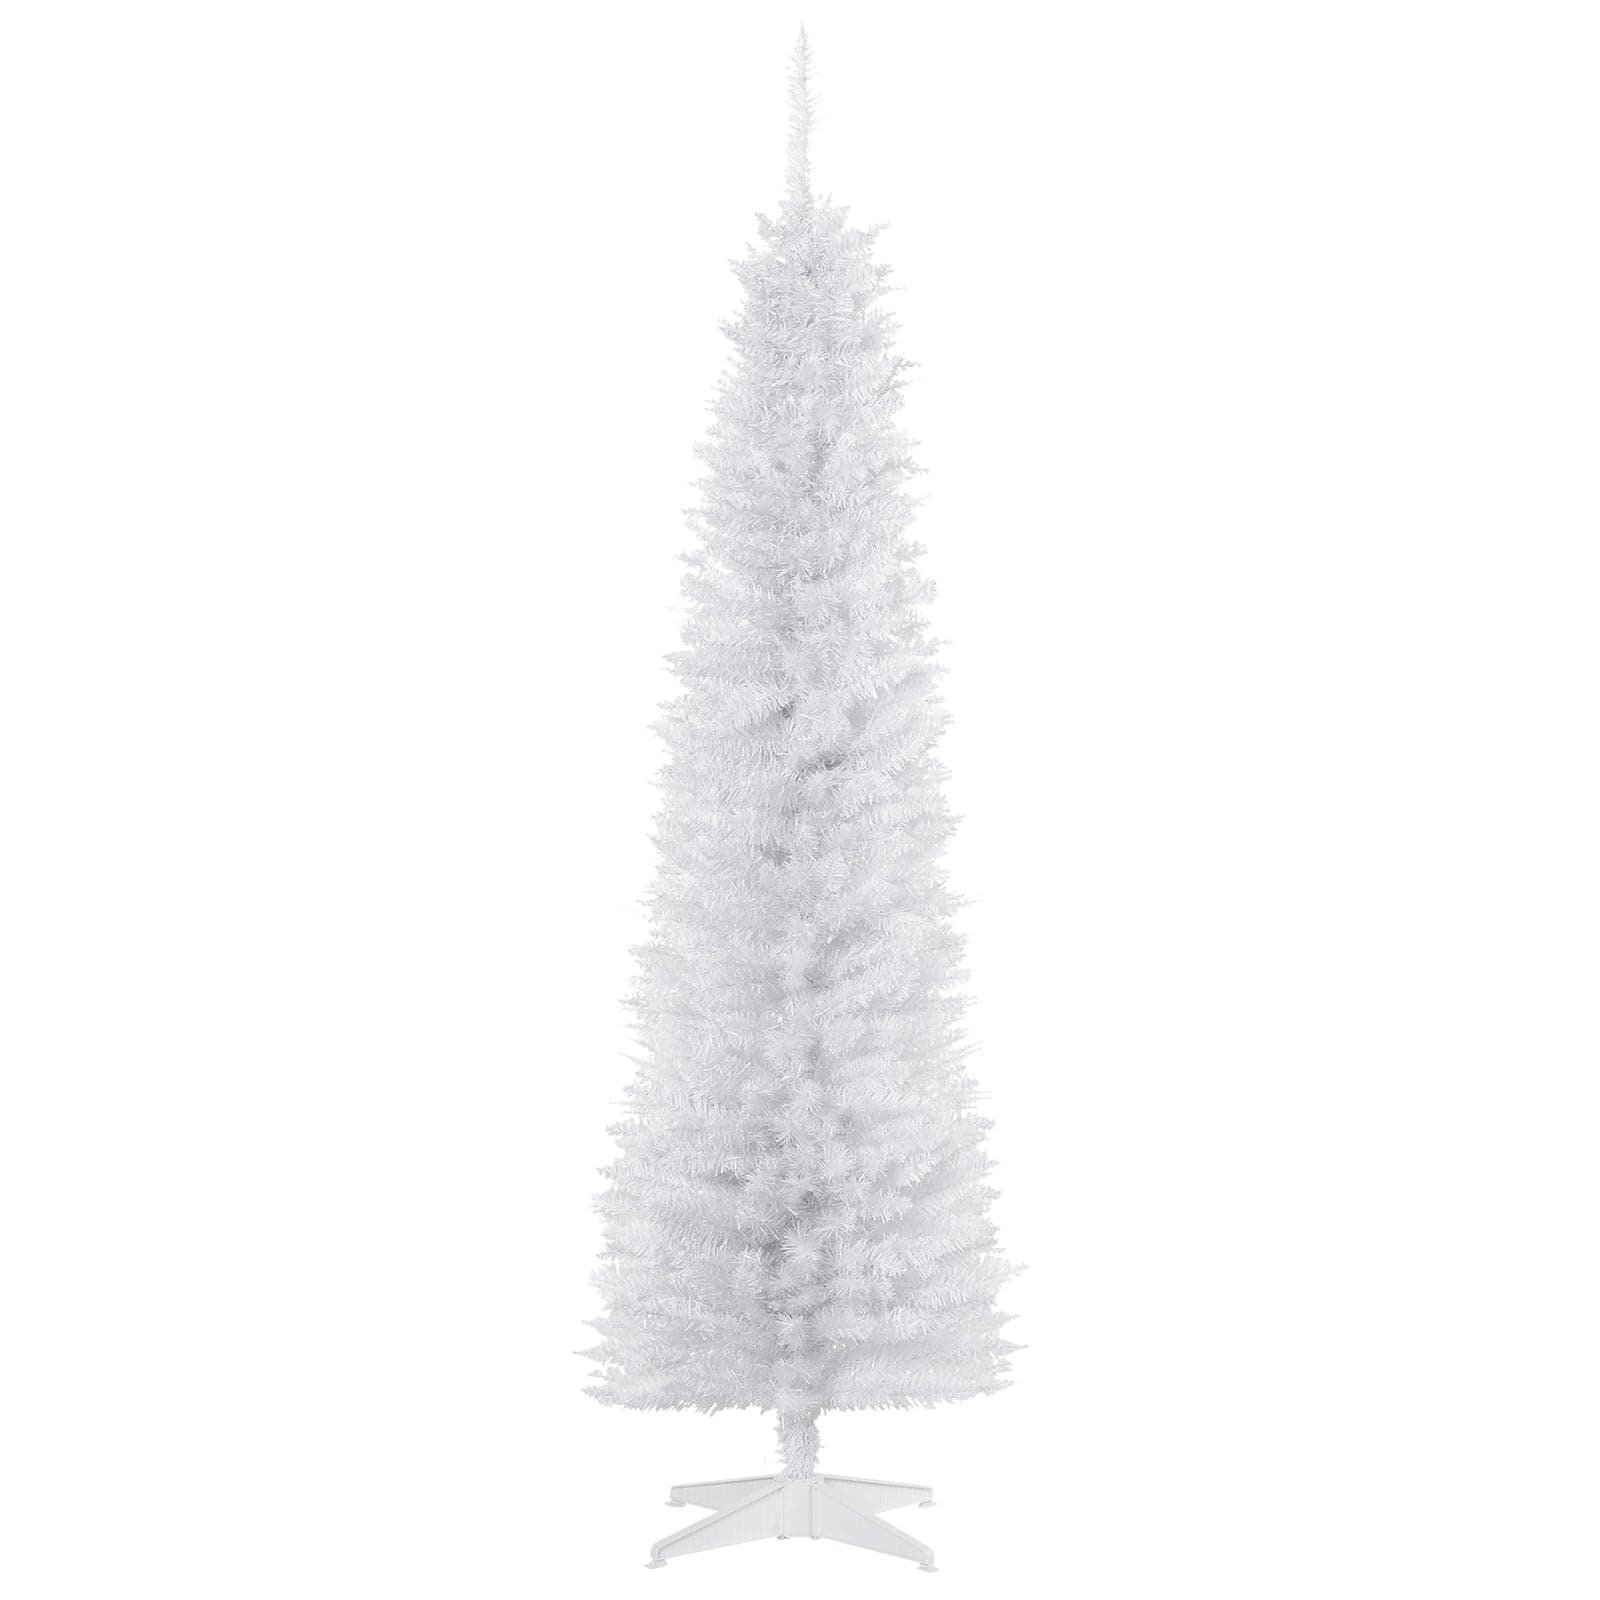 HOMCOM 6ft White Artificial PVC Slimline Christmas Tree